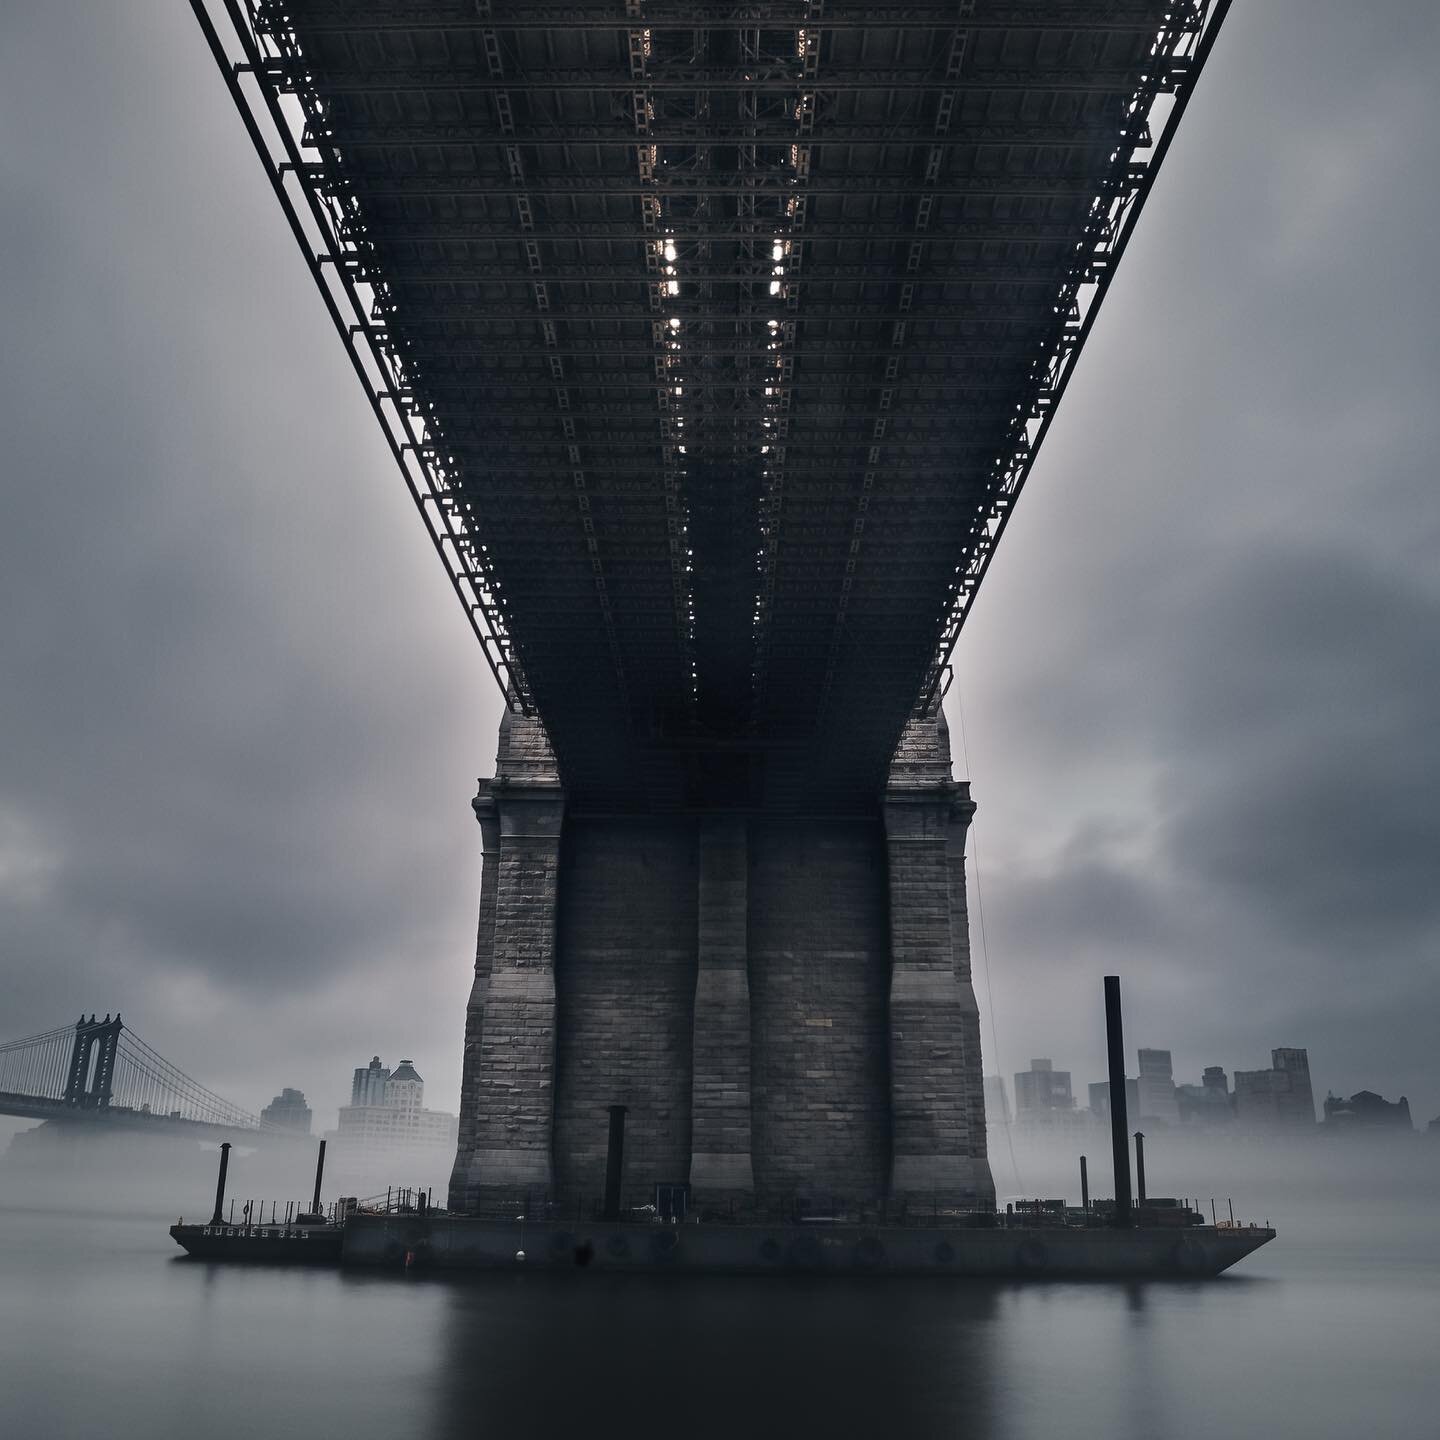 Under the foggy Brooklyn Bridge&hellip; #NYC #manhattan #brooklynbridge #newyorkcity #architecture #photography #city #nycphotographer #photo #beautiful #art #newyork #fog #leefilters